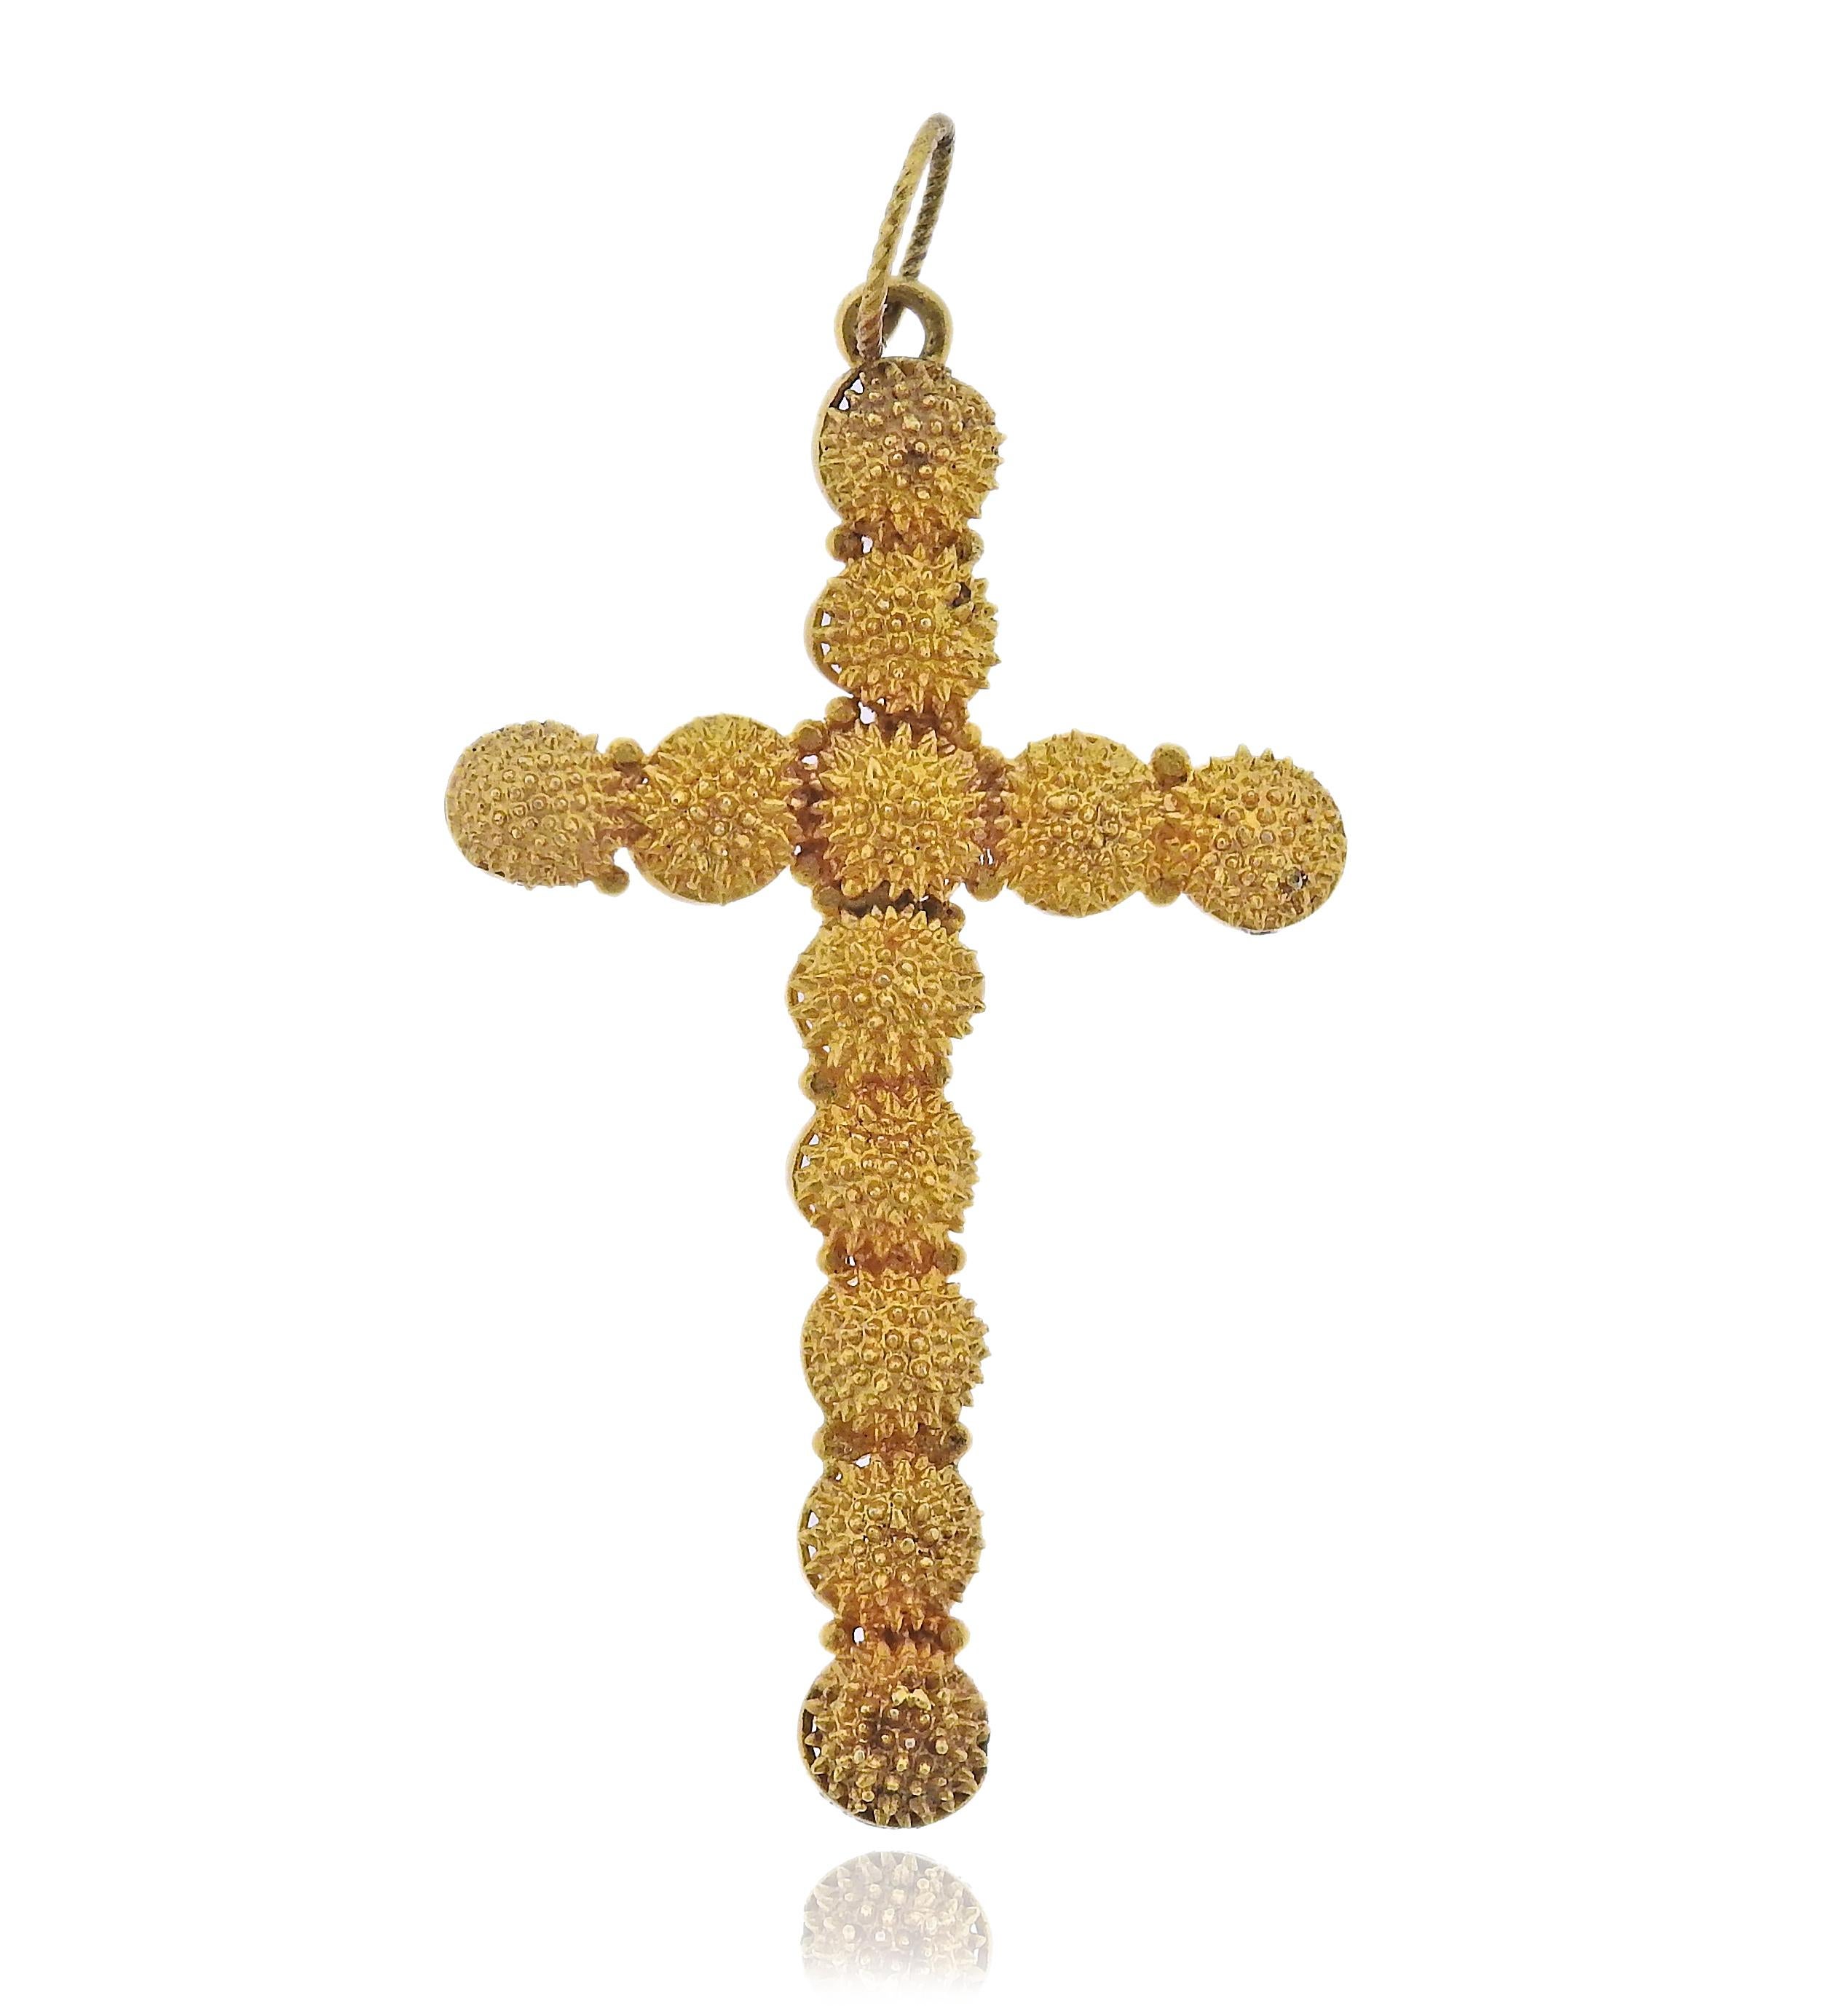 18k yellow gold cross pendant, measuring 48mm x 28mm. Weighs 3.7 grams.